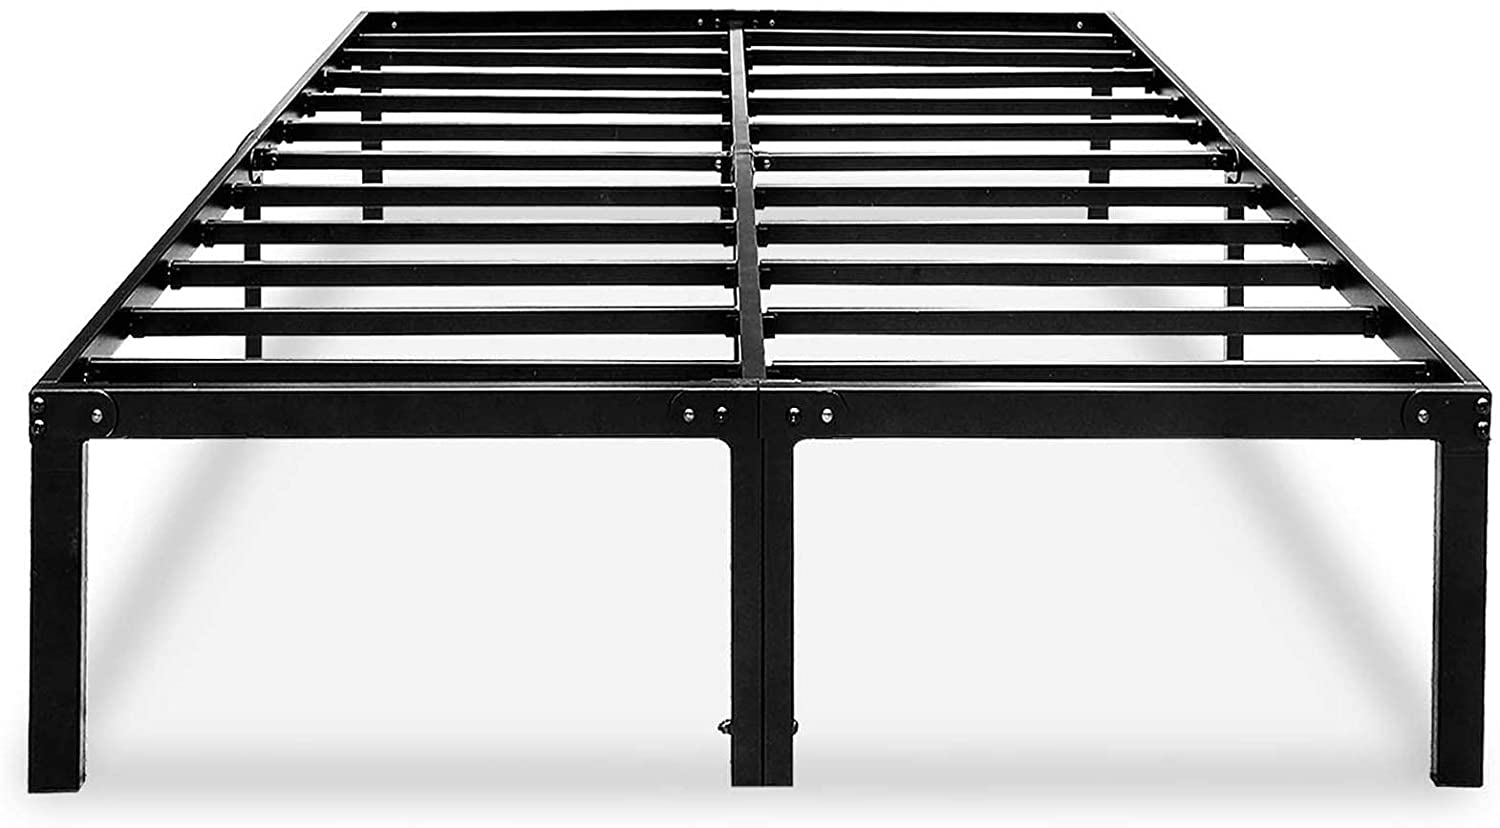 HAAGEEP Full Metal Platform Bed Frame